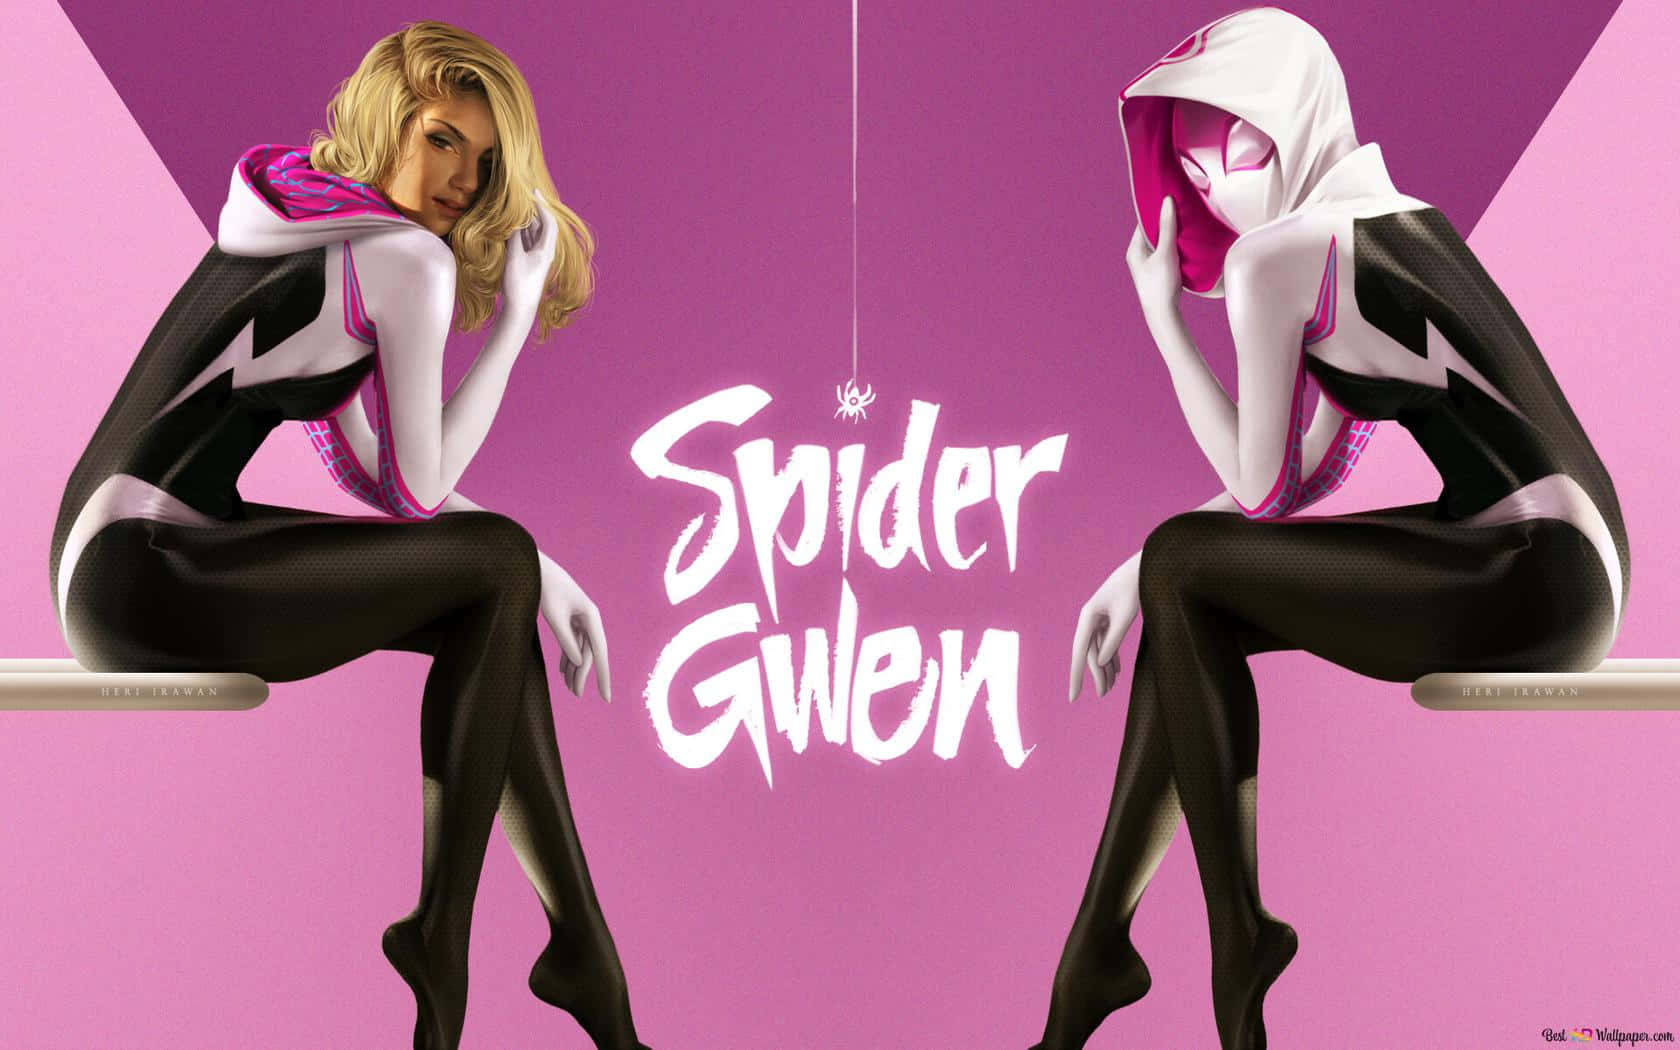 Spider Gwen prepares to take on her enemies!